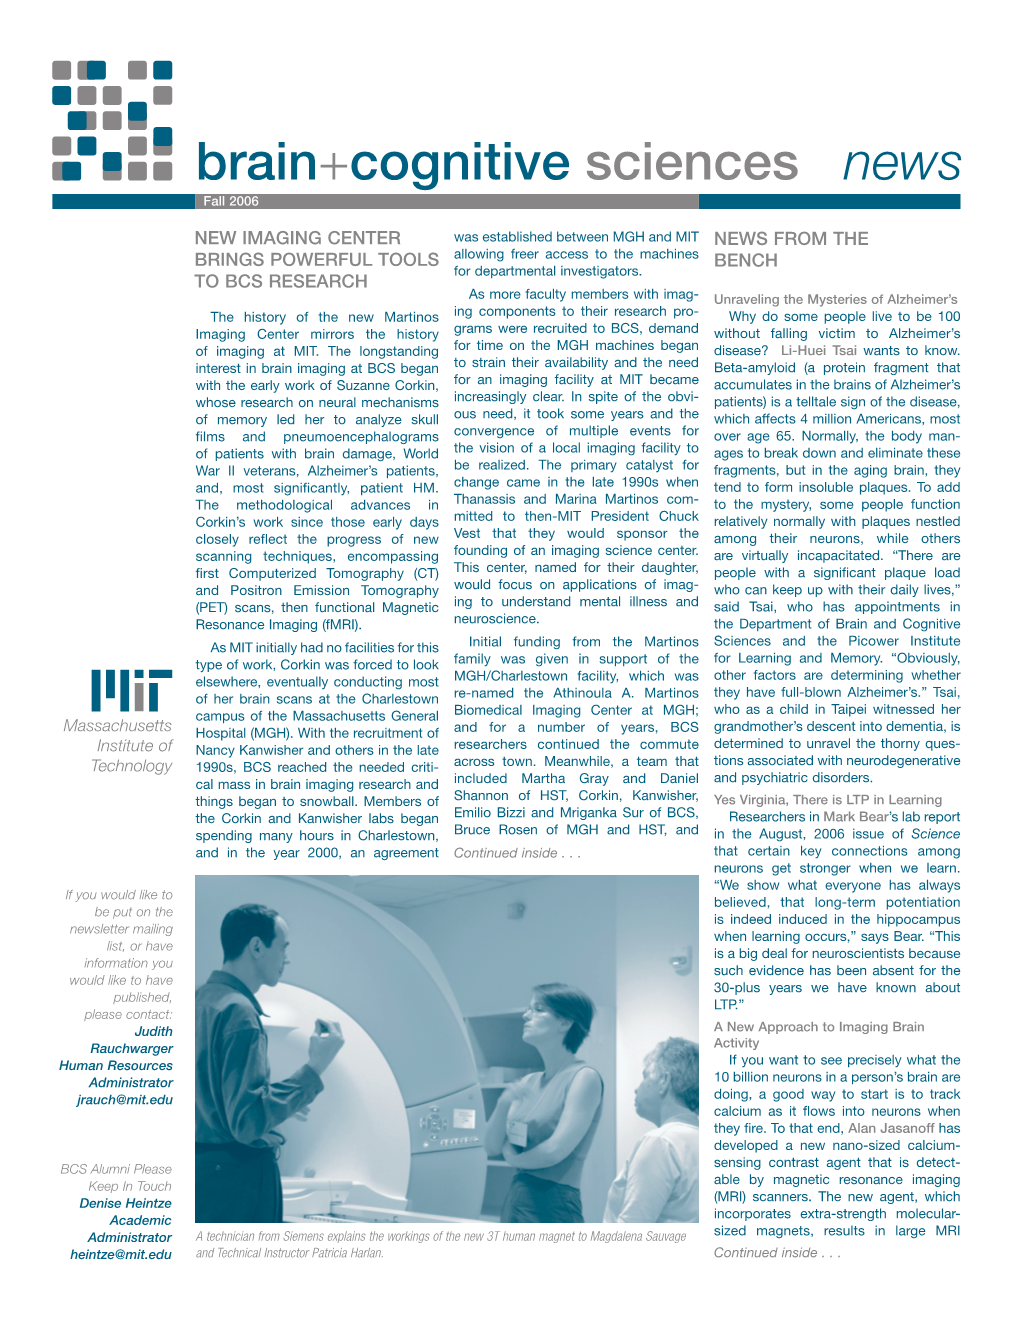 Brain+Cognitive Sciences News Fall 2006